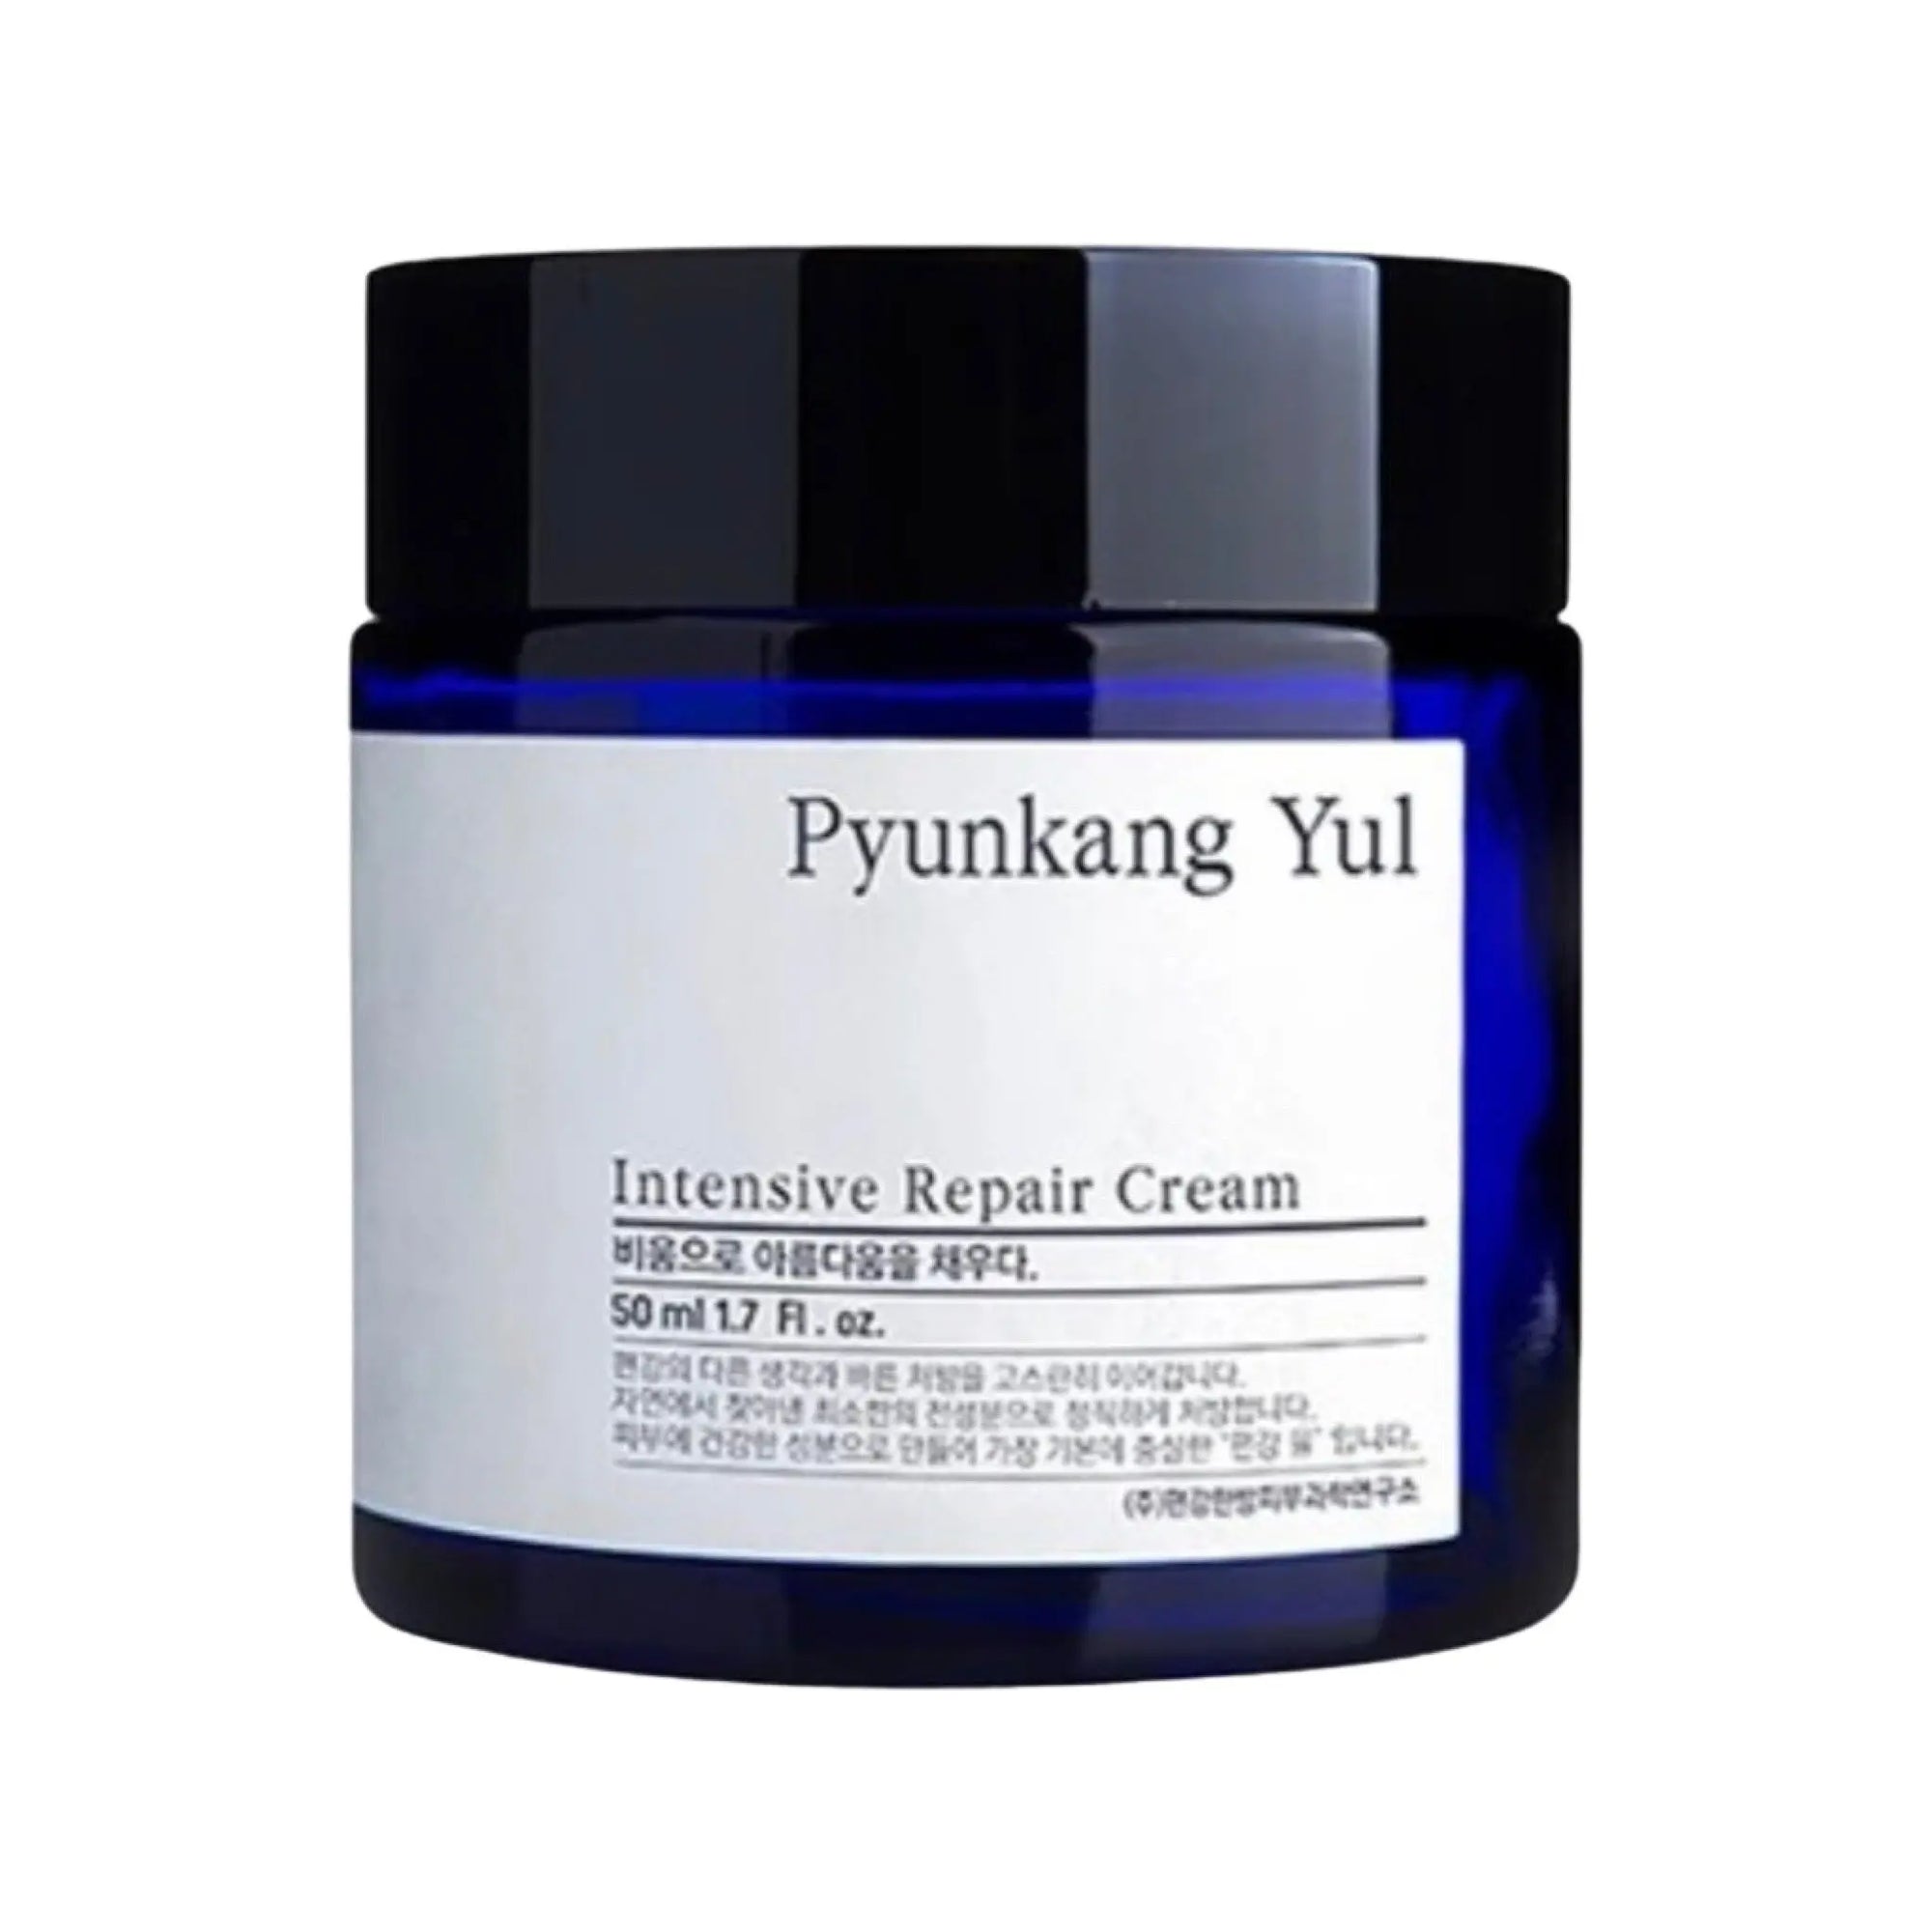 Pyunkang Yul - Intensive Repair Cream 50mL Pyunkang Yul